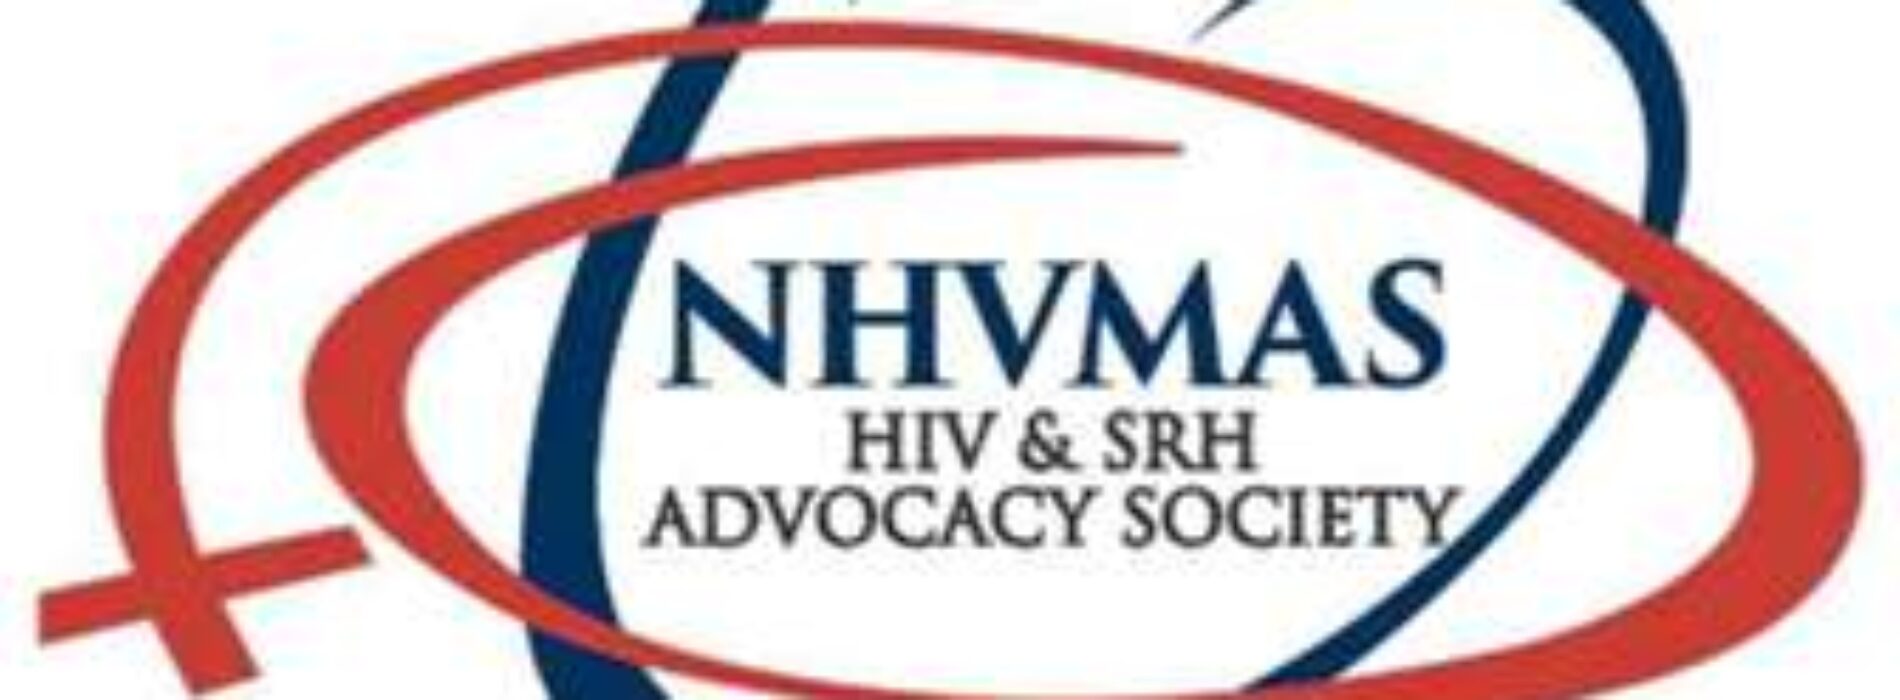 NHVMAS restates call for adoption of new HIV PreEP product